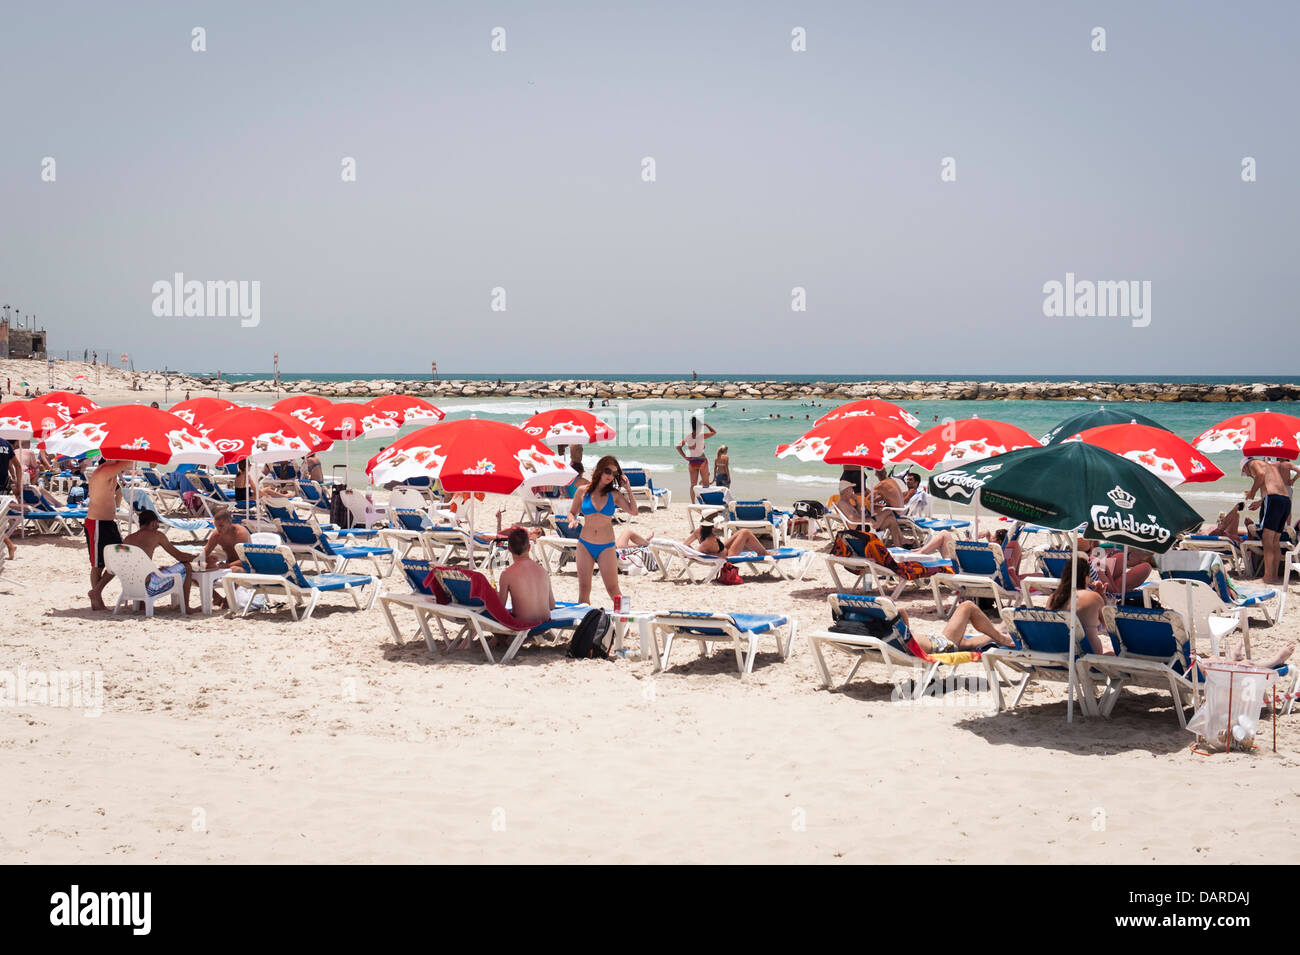 Israel Tel Aviv sand beach scene parasols umbrellas sonnenschirm sea lounger loungers people sunbathers swimming swimmers stone breakwater sea Stock Photo